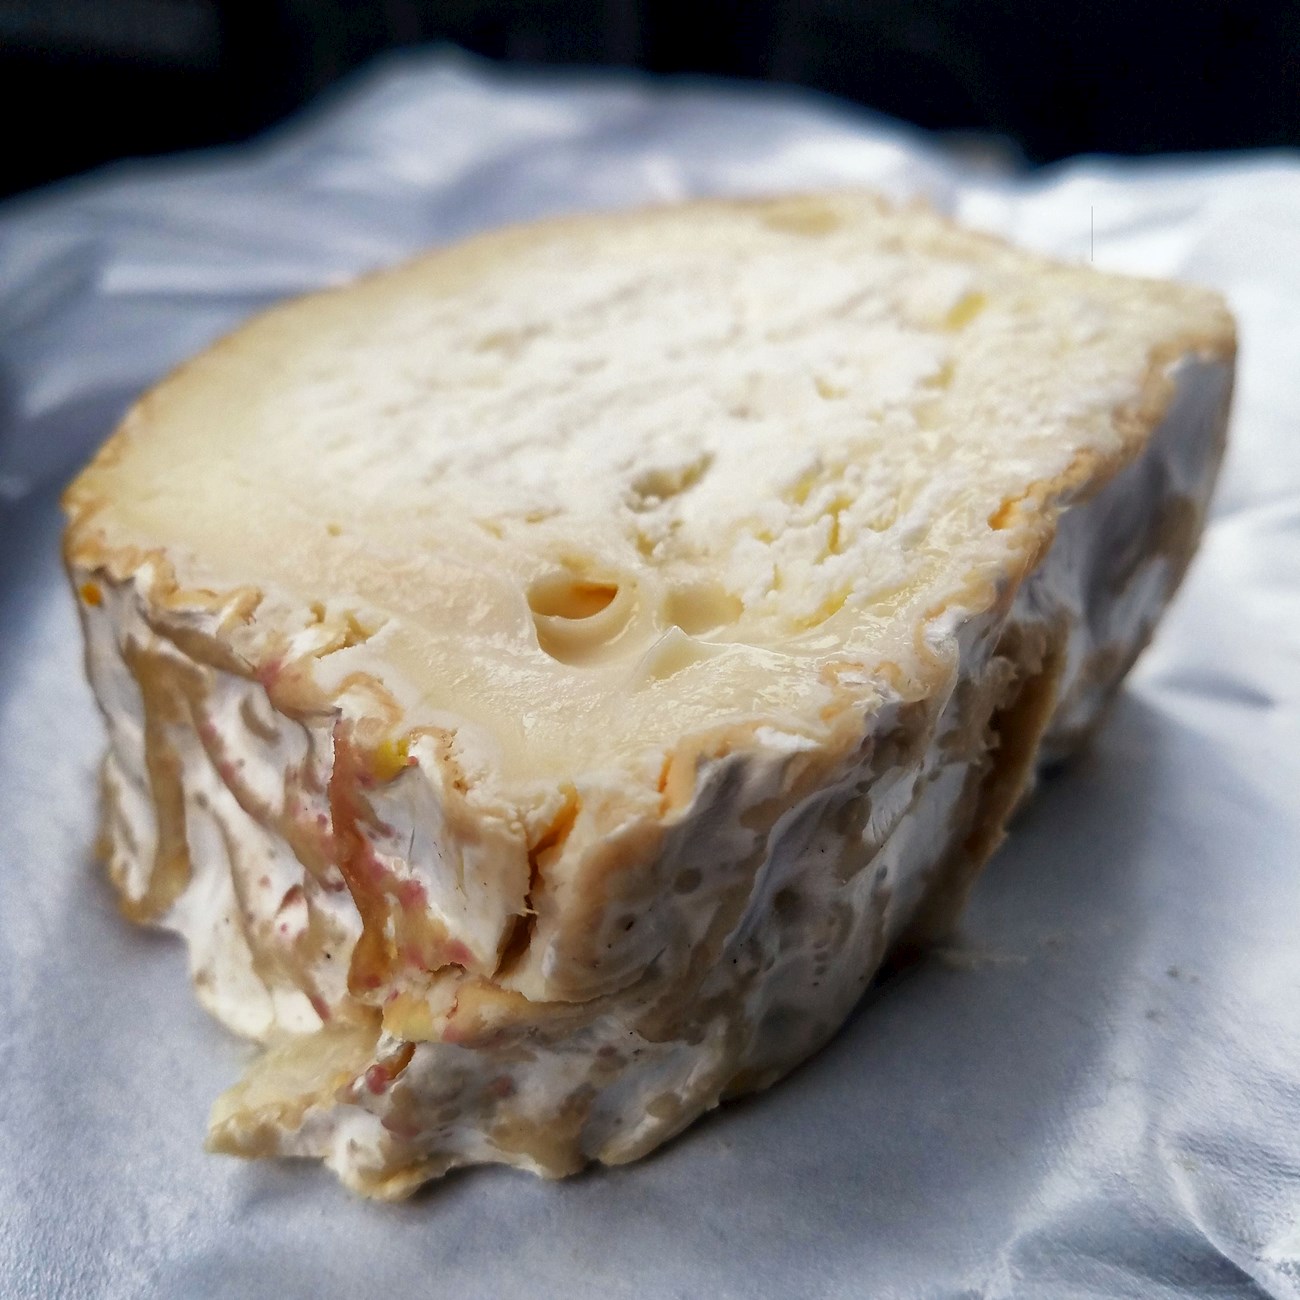 10 Most Popular Centrien Goat's Milk Cheeses